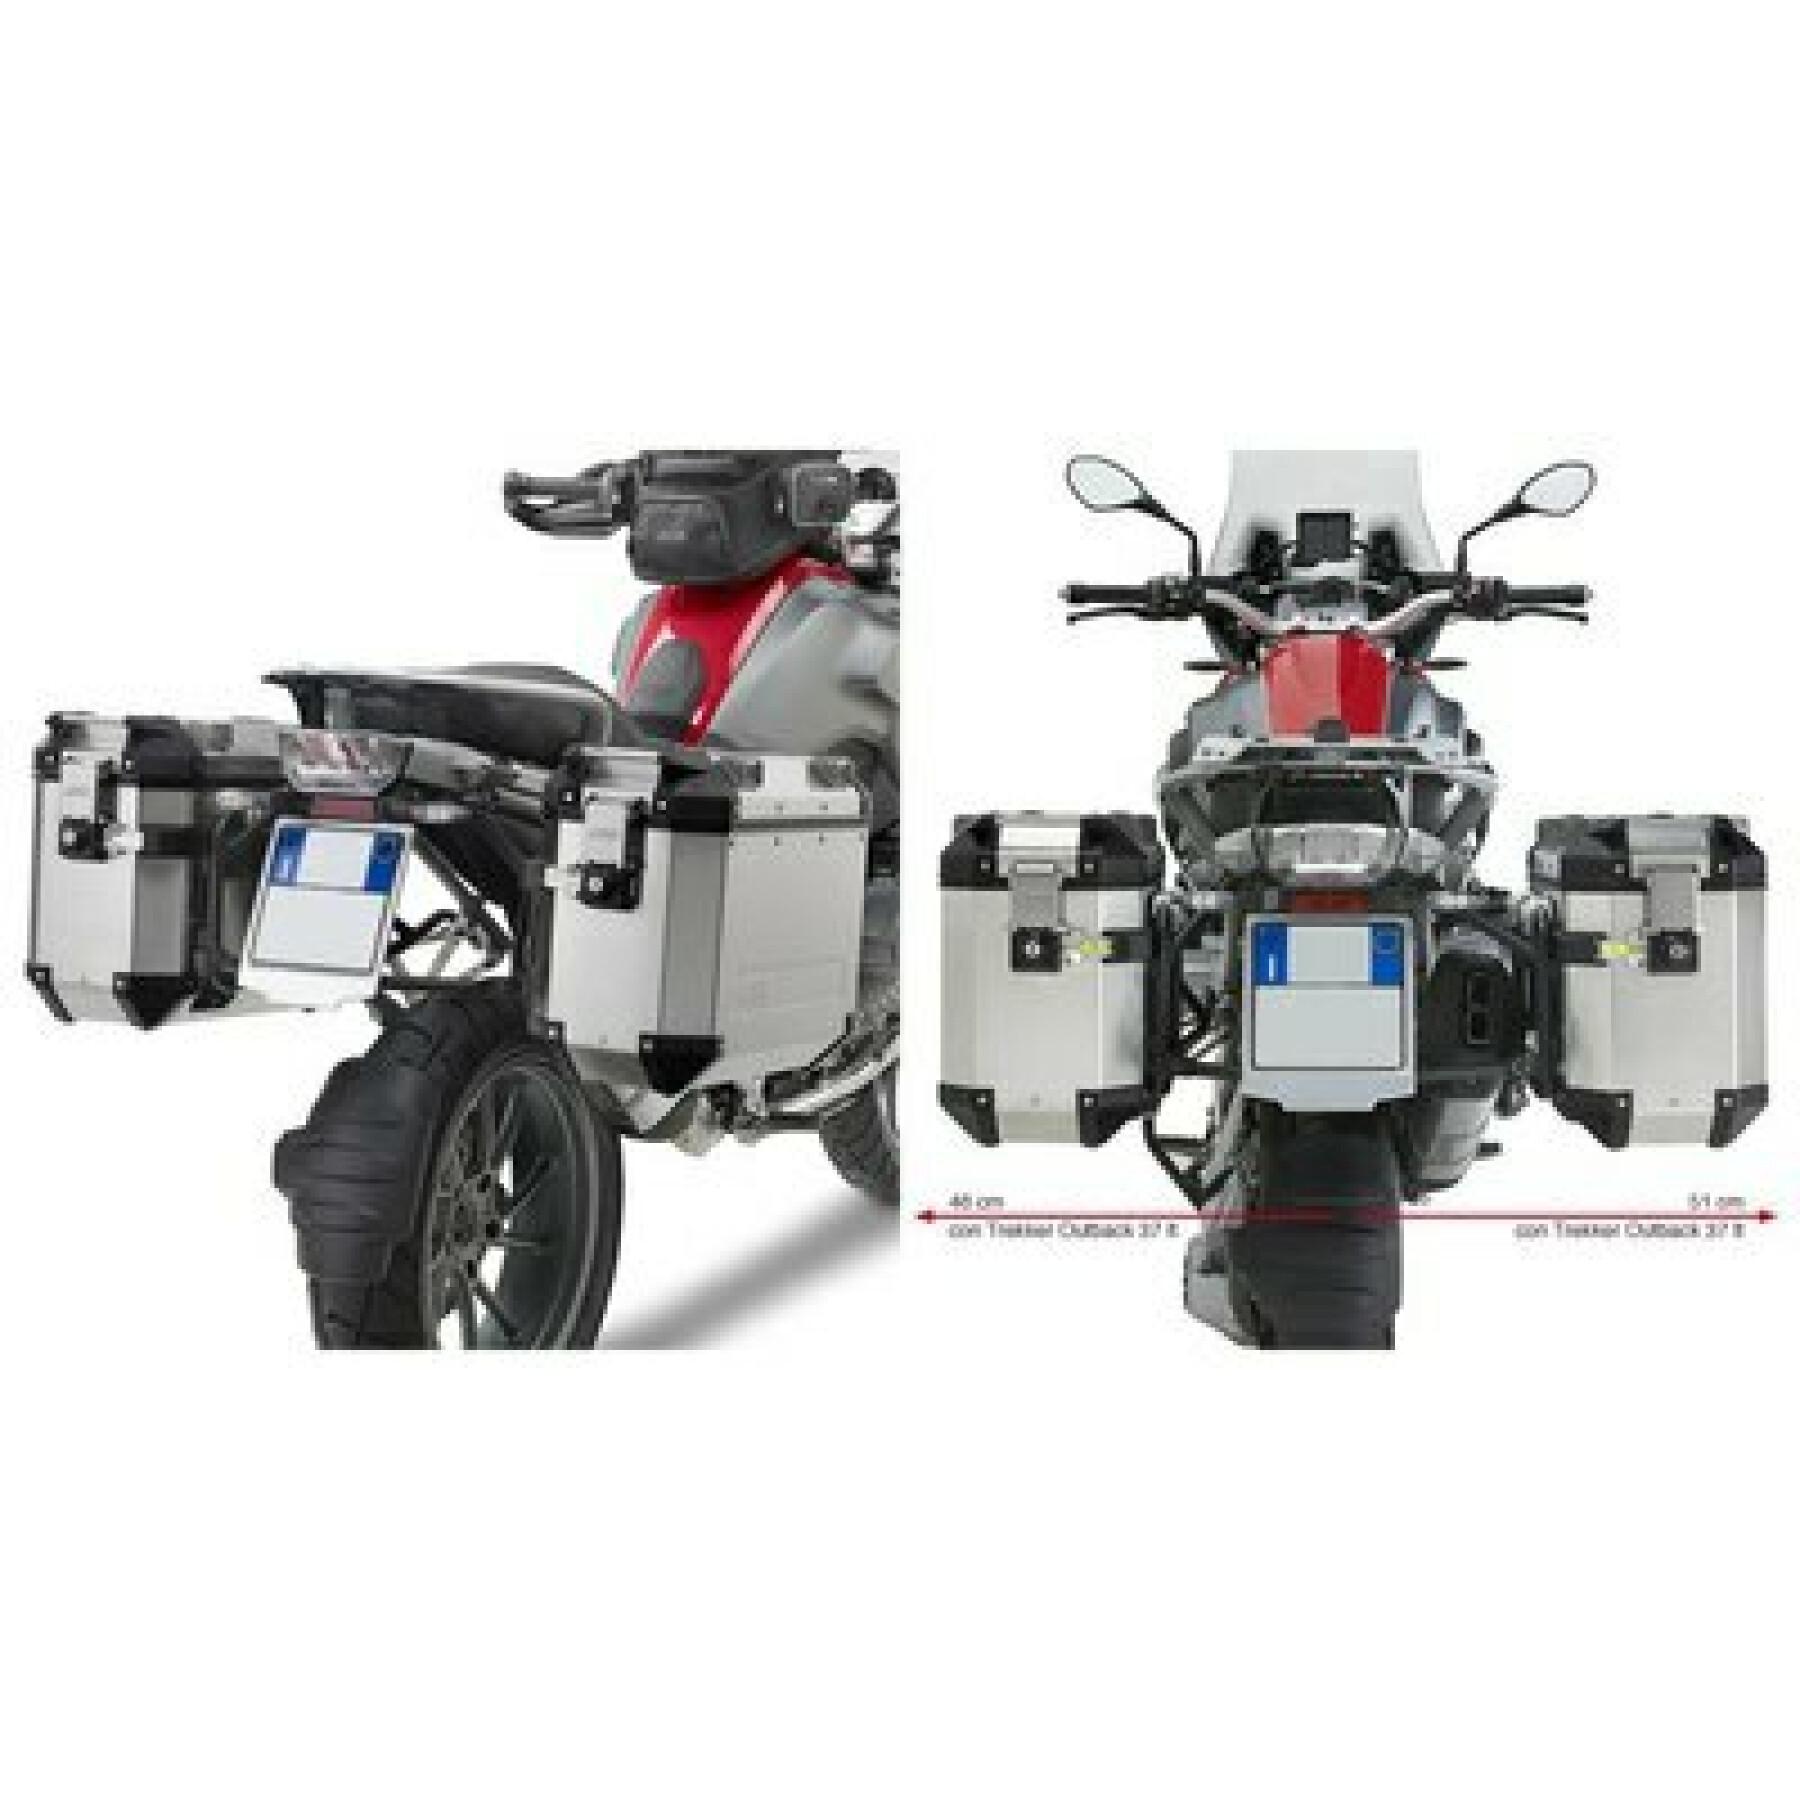 Soporte de la maleta lateral de la moto Givi Monokey Cam-Side Bmw R 1200 Gs (13 À 18)